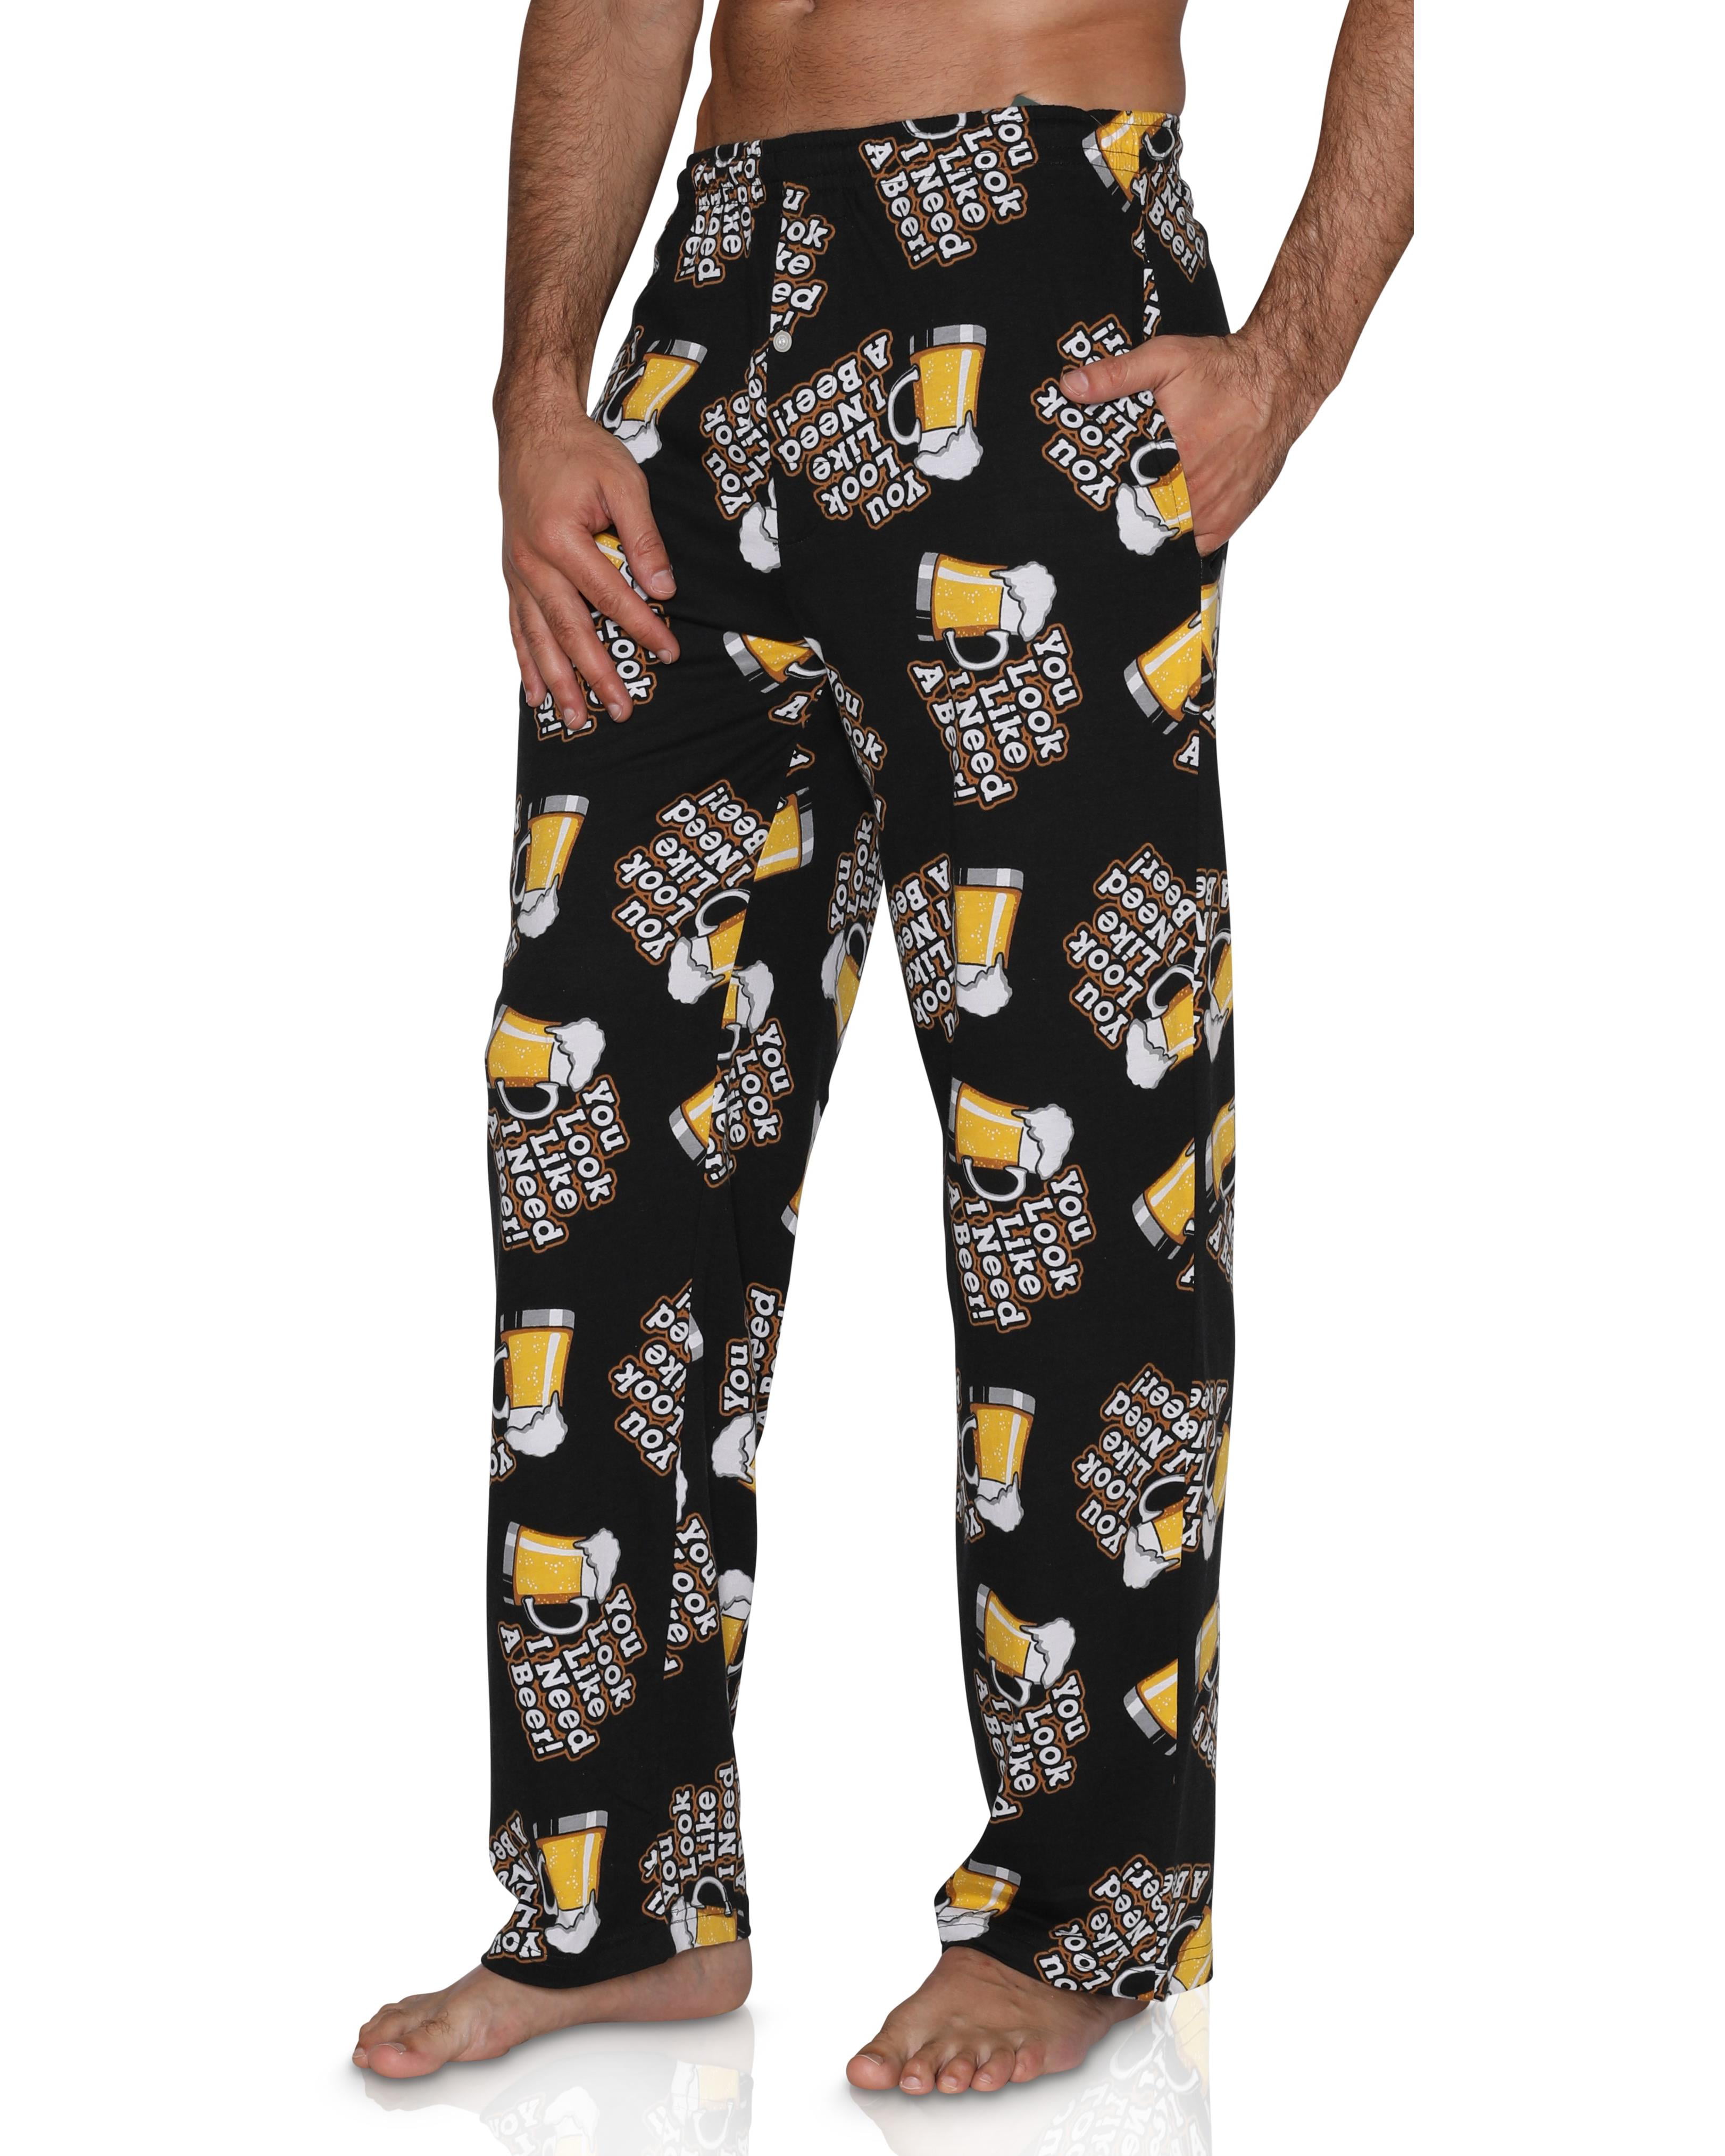 Fun Boxers - Men's Fun Pants Lounge Pajama Pants Boxers Printed ...